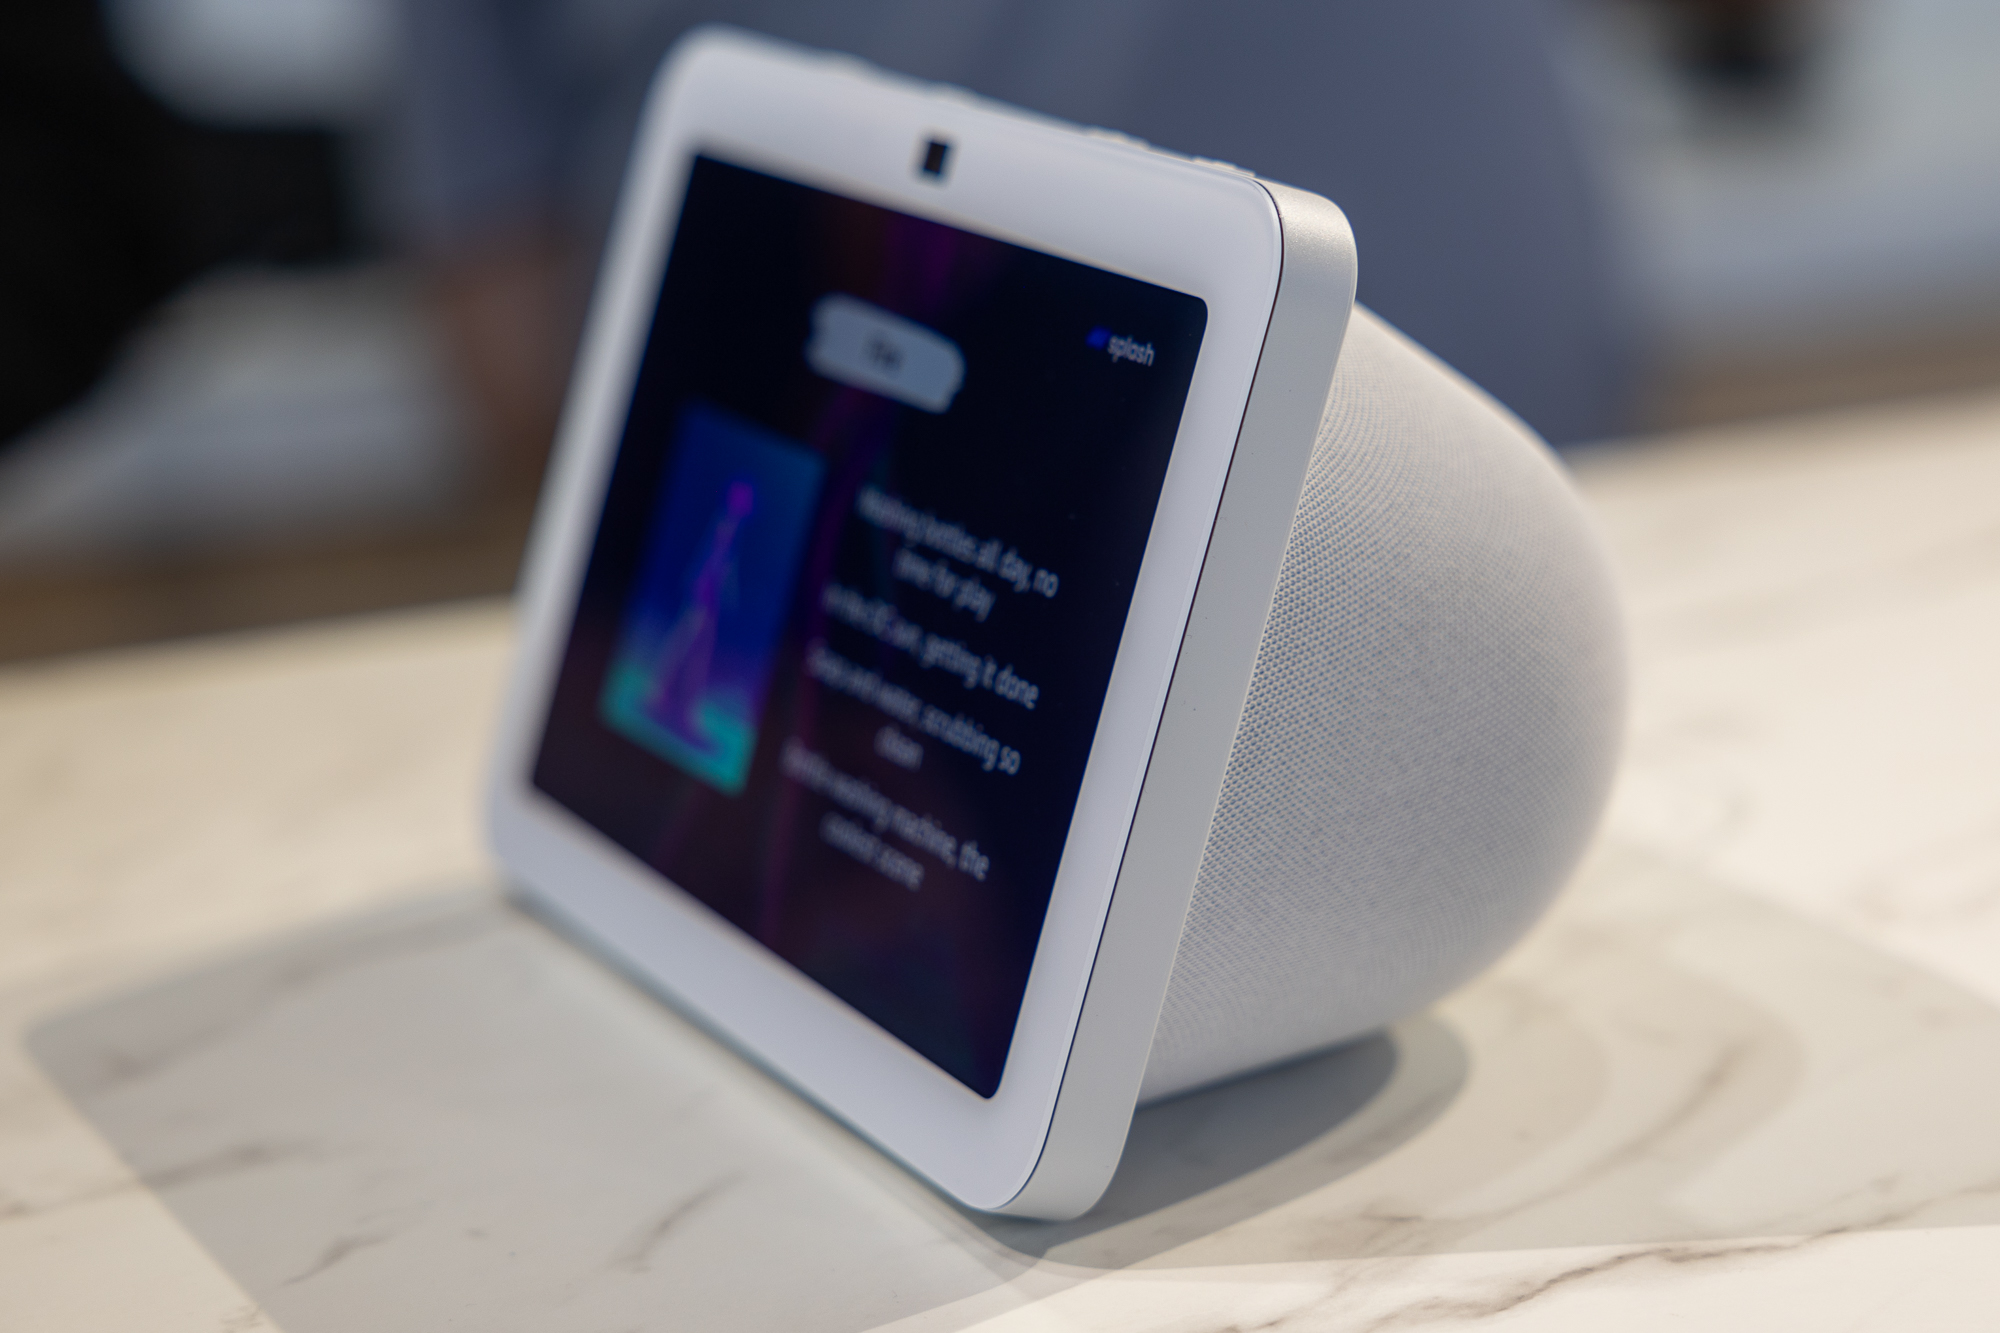 unveils the Echo Hub, a wall-mountable smart home